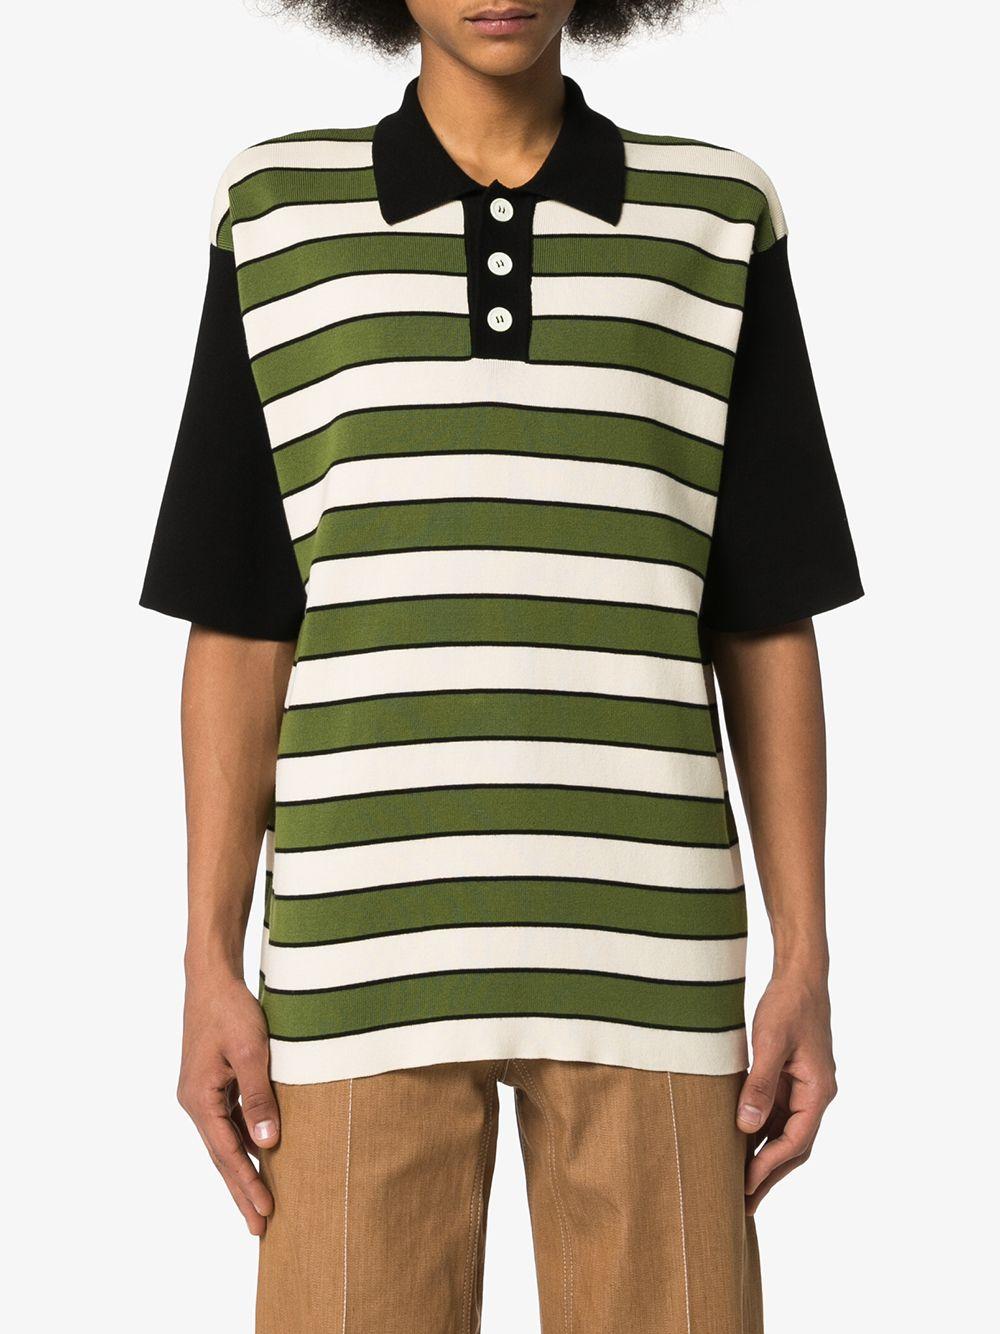 Sunnei Striped Fine-knit Polo Shirt in Green for Men - Lyst